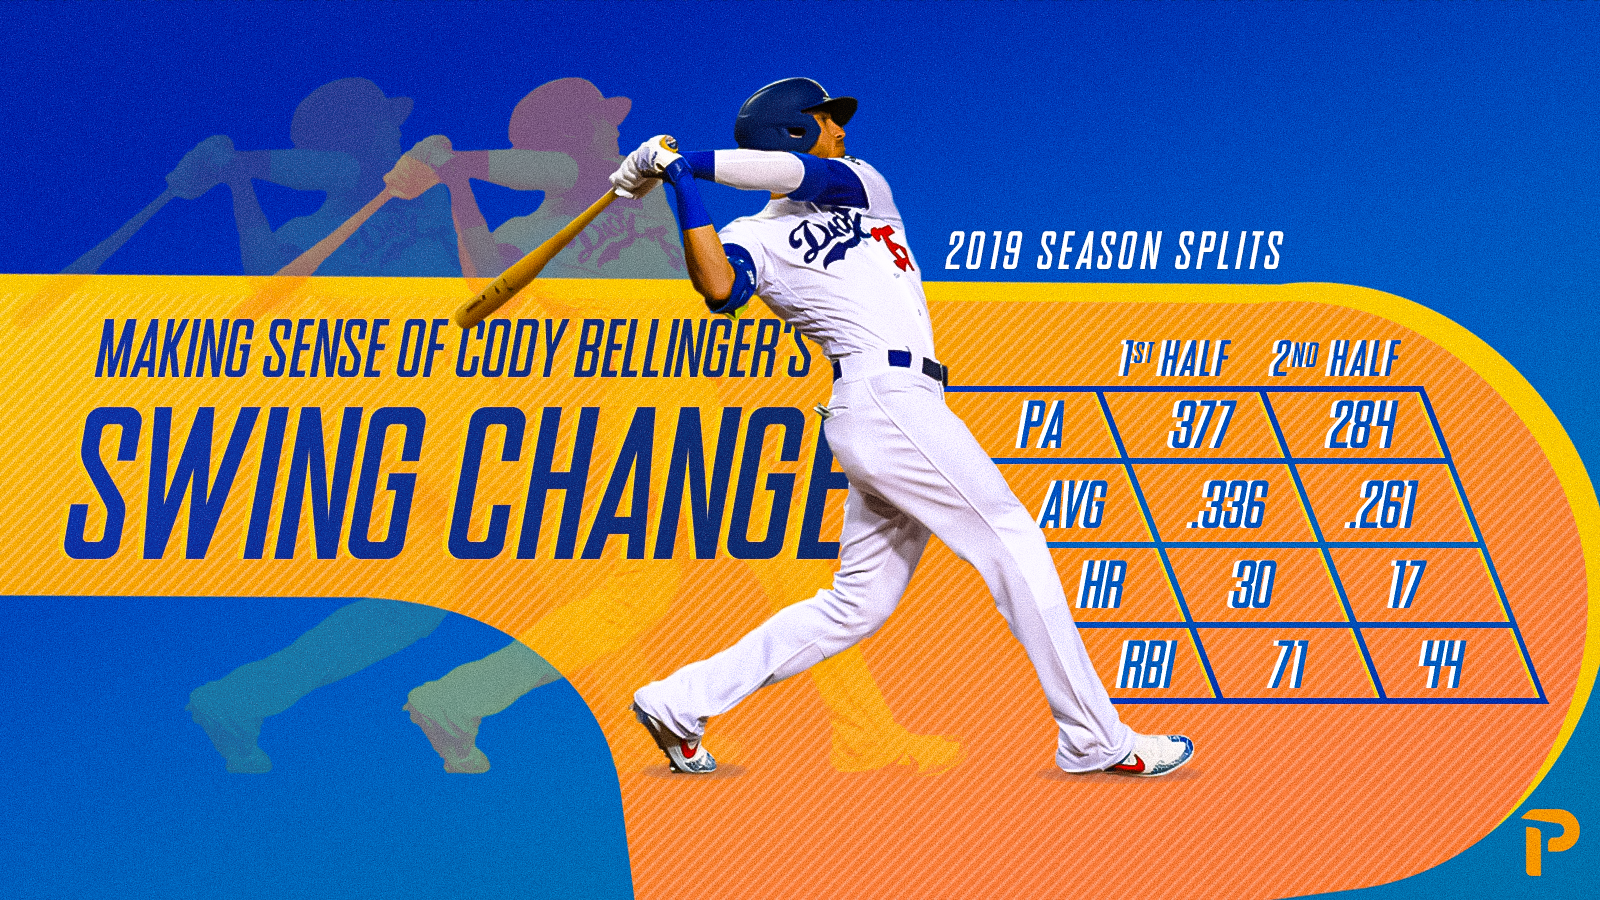 Cody Bellinger changed batting stance during break